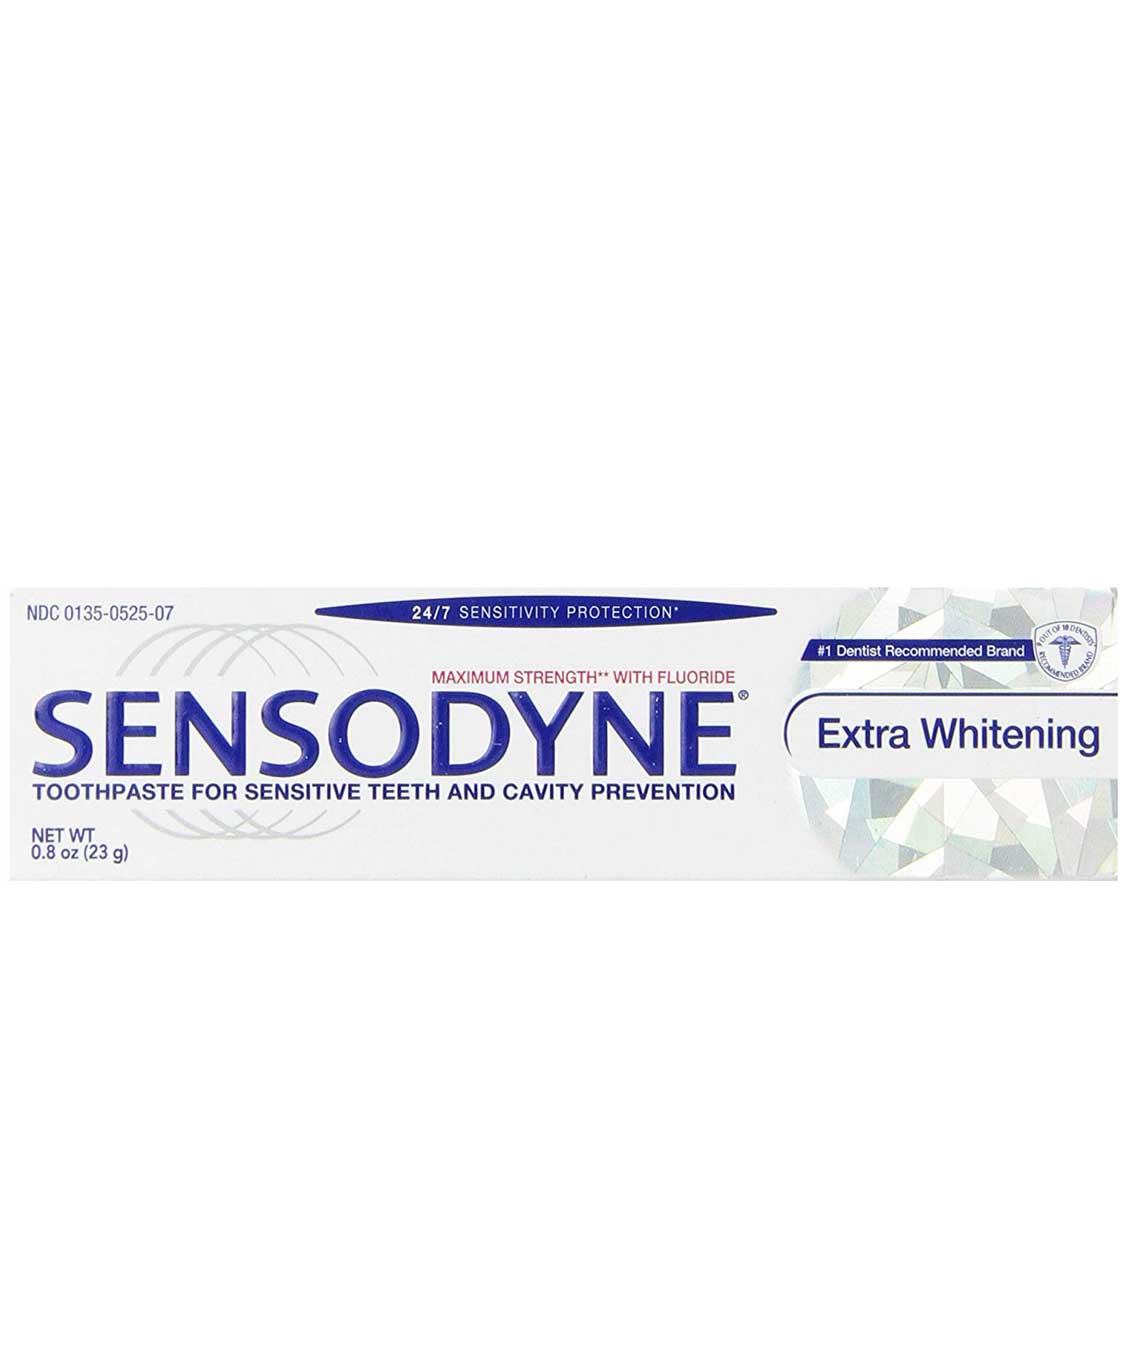 Sensodyne Extra Whitening Sensitivity Toothpaste for Sensitive Teeth Whitening, 0.8 Ounce (Travel Size)